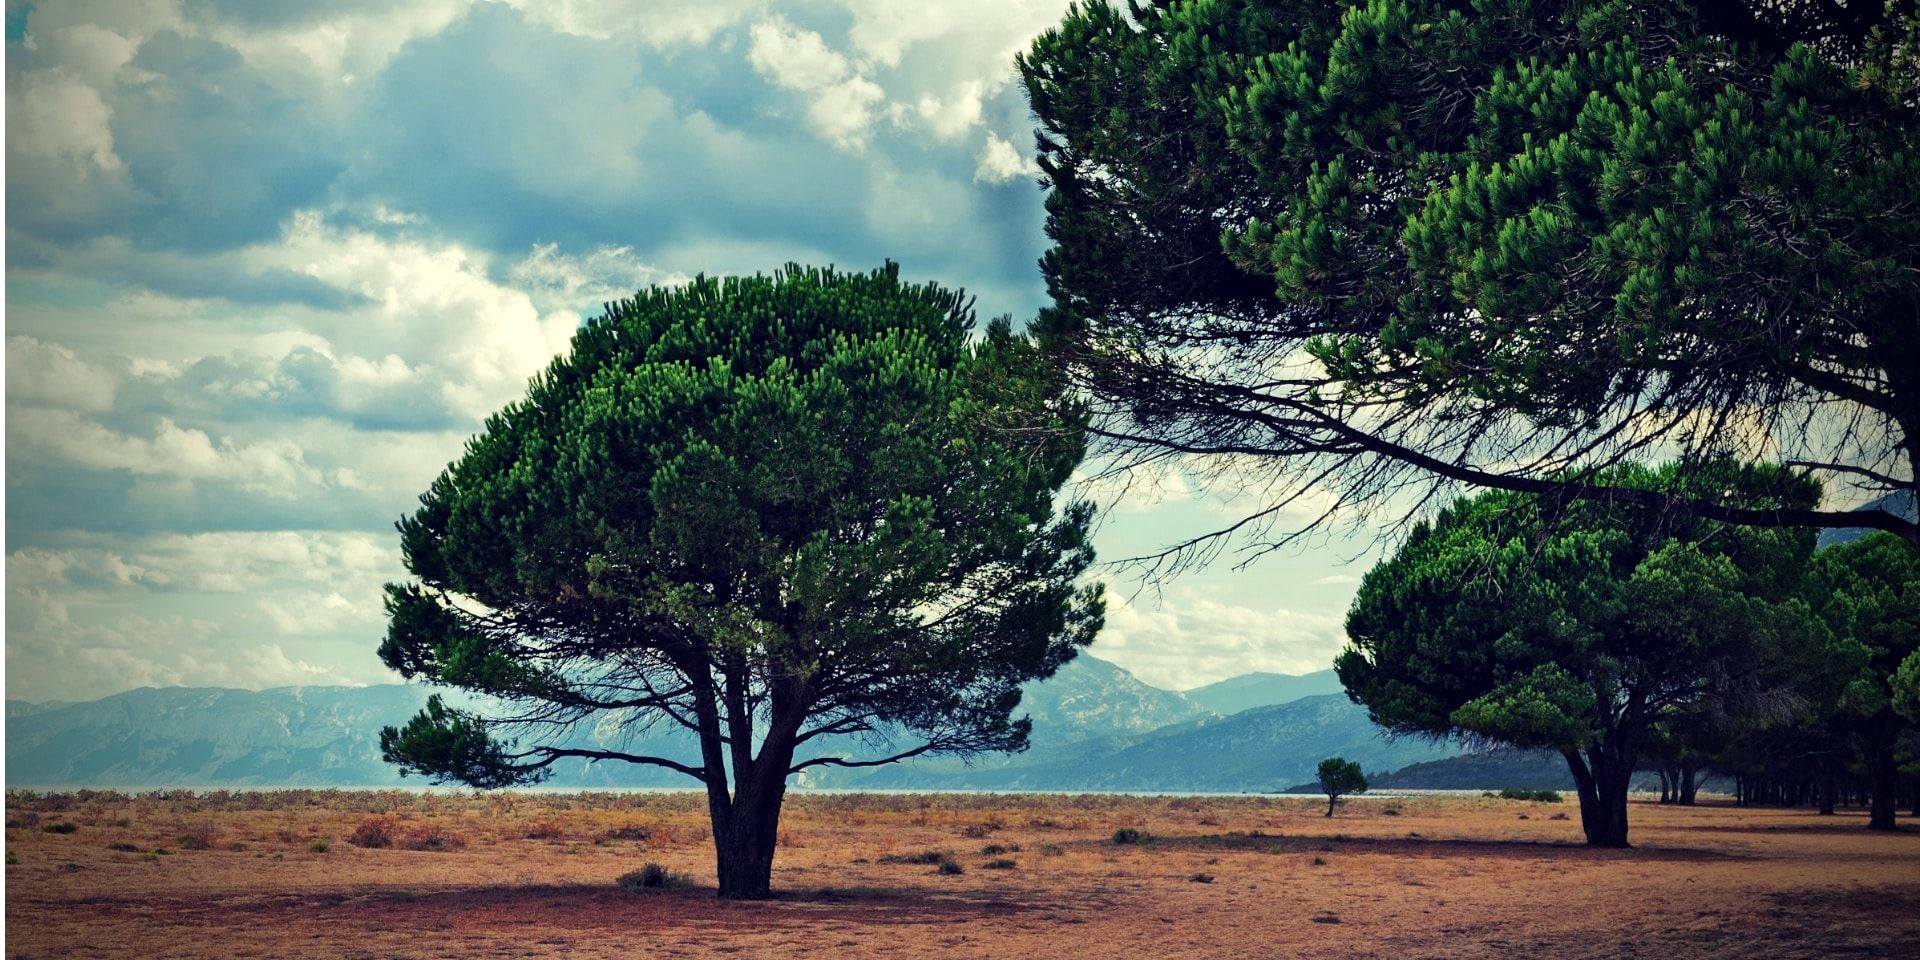 Pycnogenol Benefits Maritime Pine on a Sardinian beach